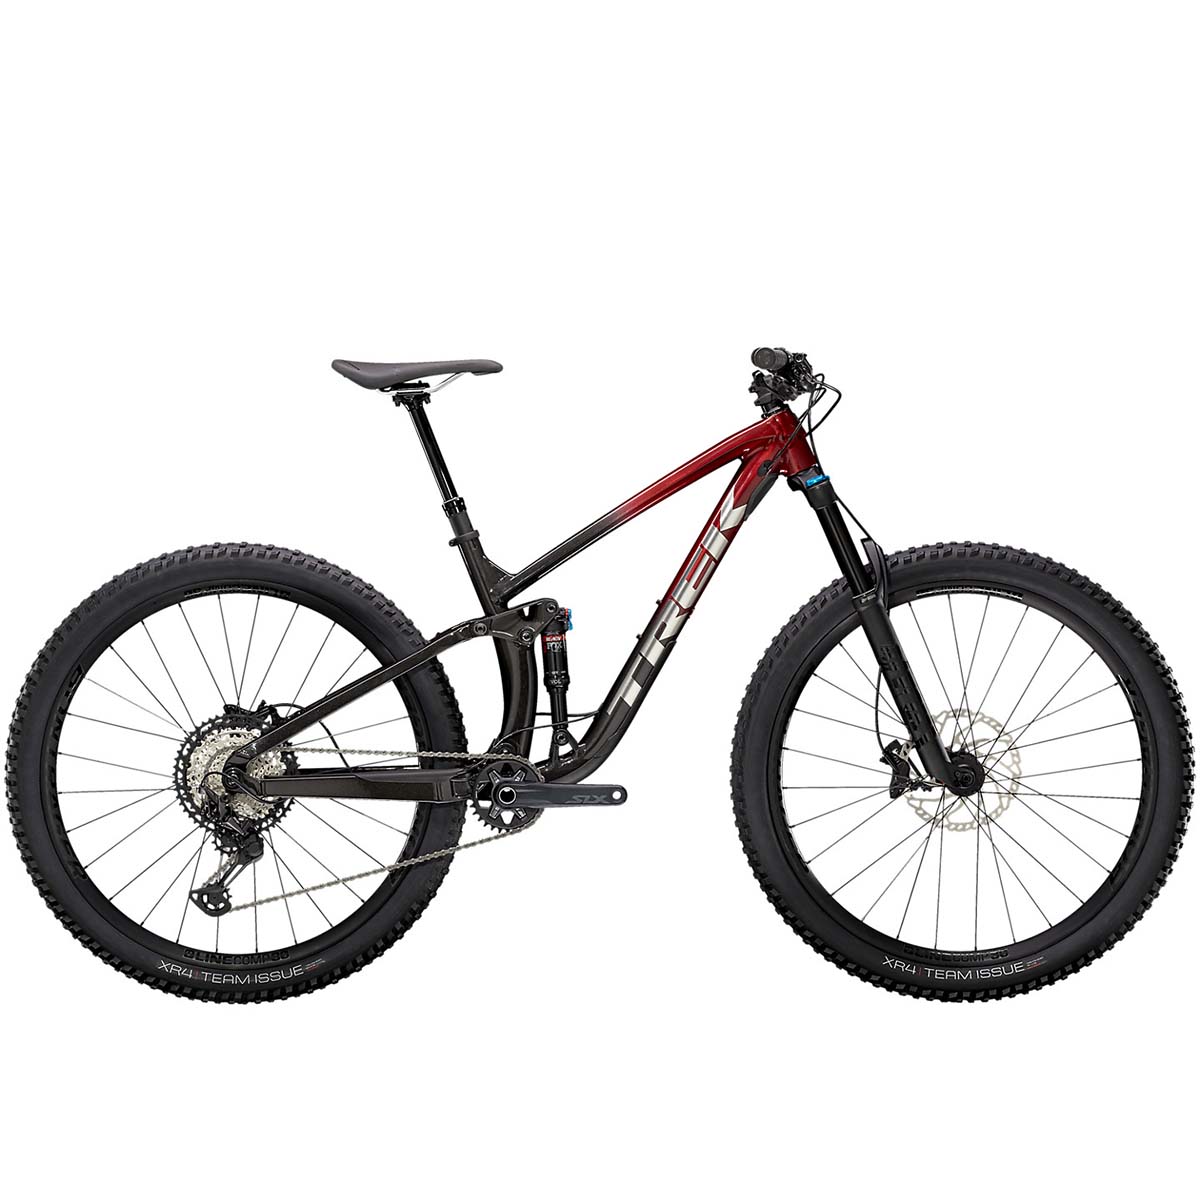 2022 Trek Fuel EX 8 Mountain Bike (ASIACYCLES)Buy and SellSporting GoodsNoidaJhundpura